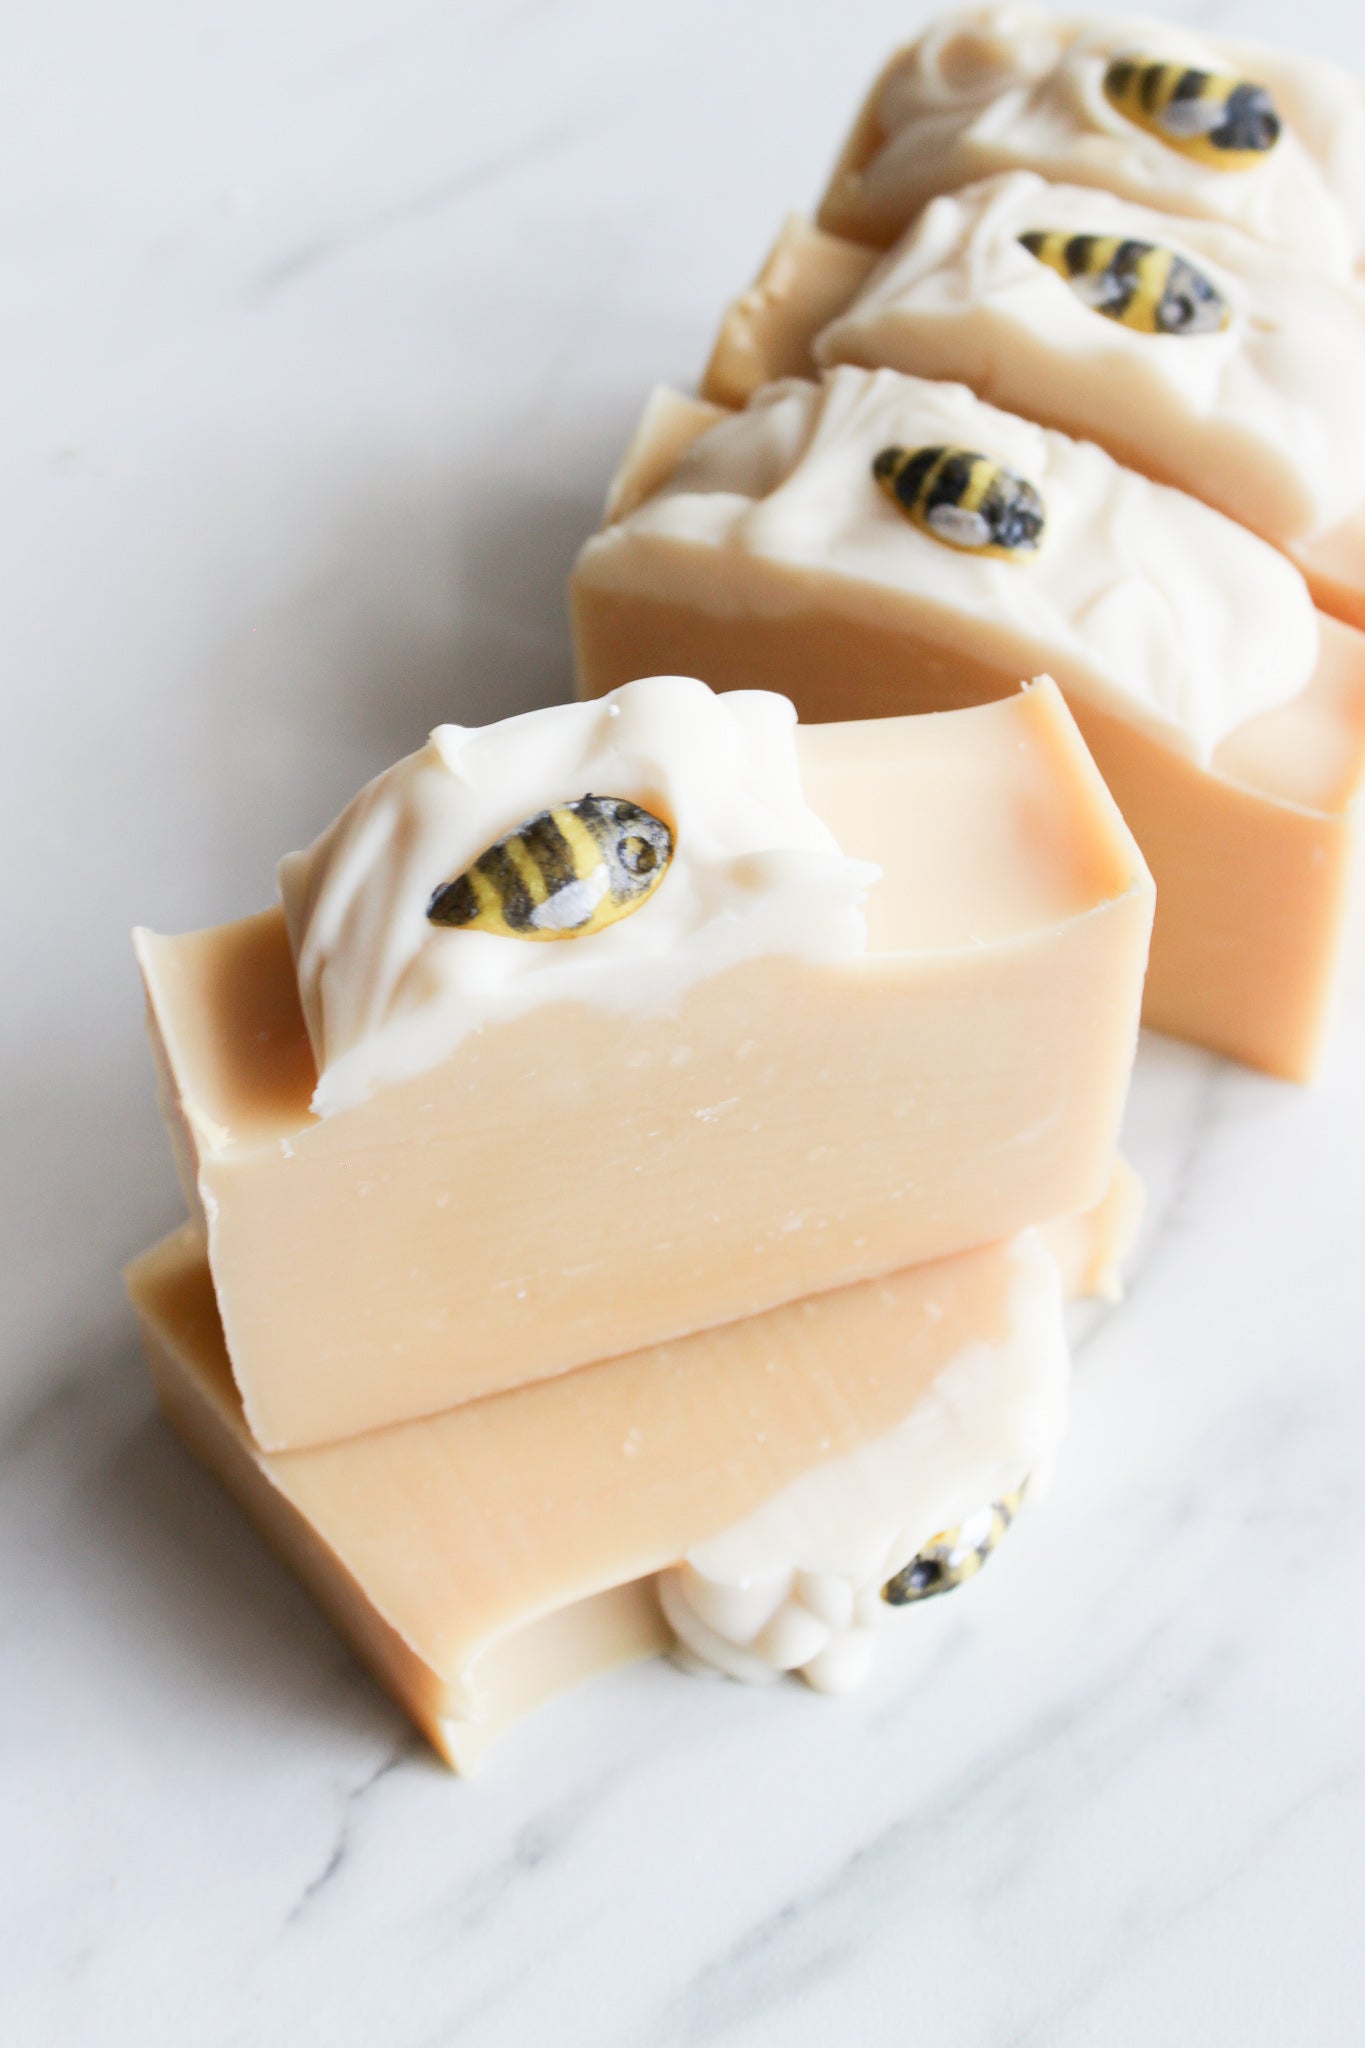 Milk & Honey - Handcrafted Soap Bar